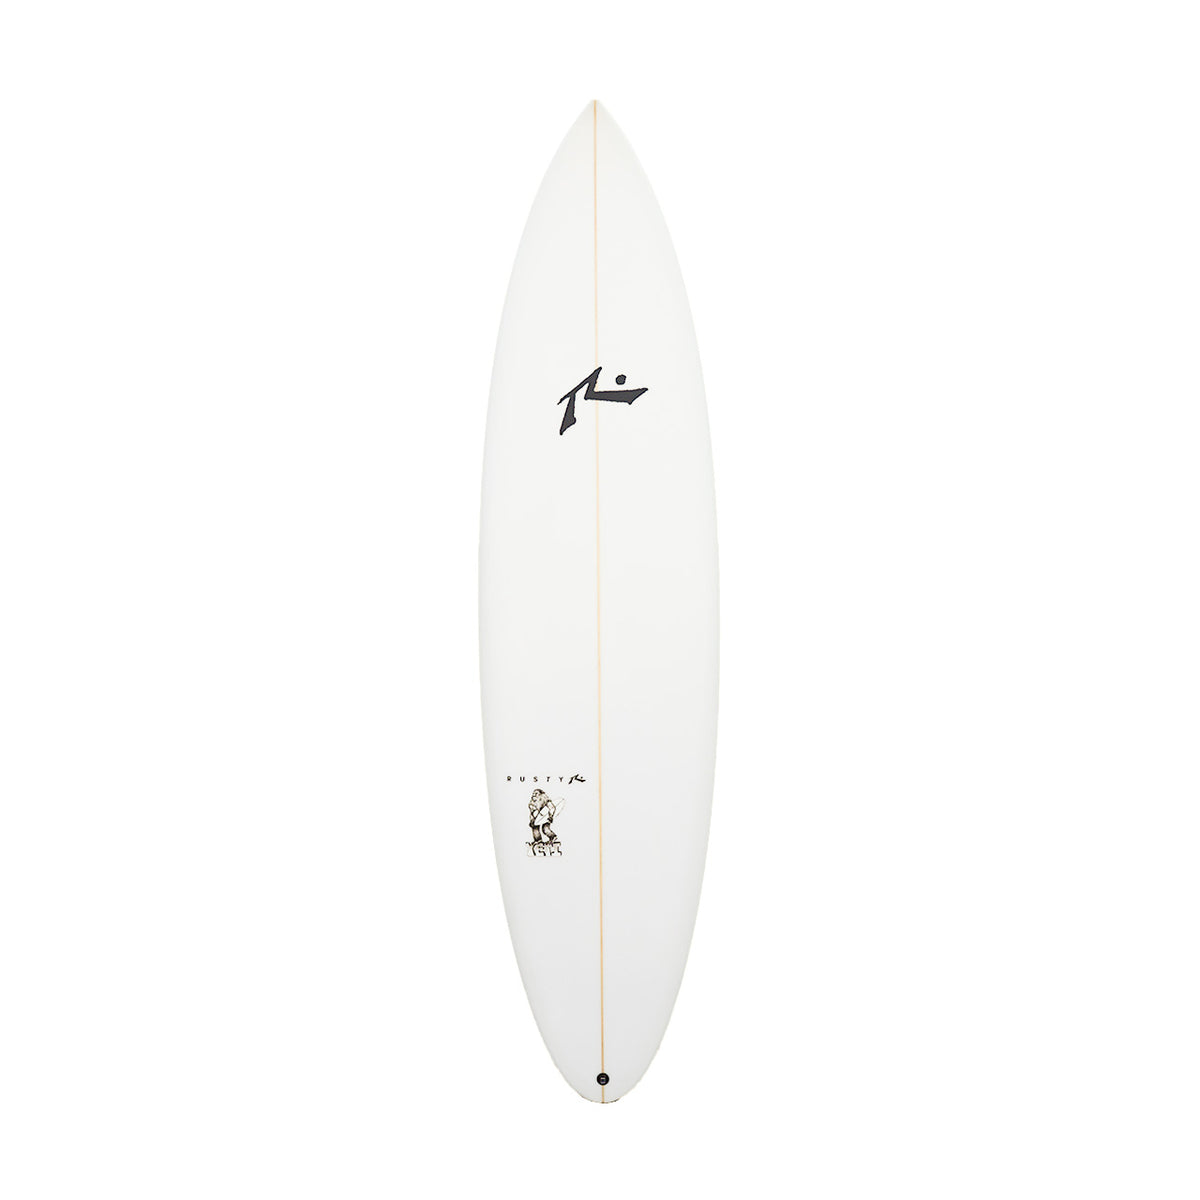 Yeti - Big Board - Deck View - Rusty Surfboards